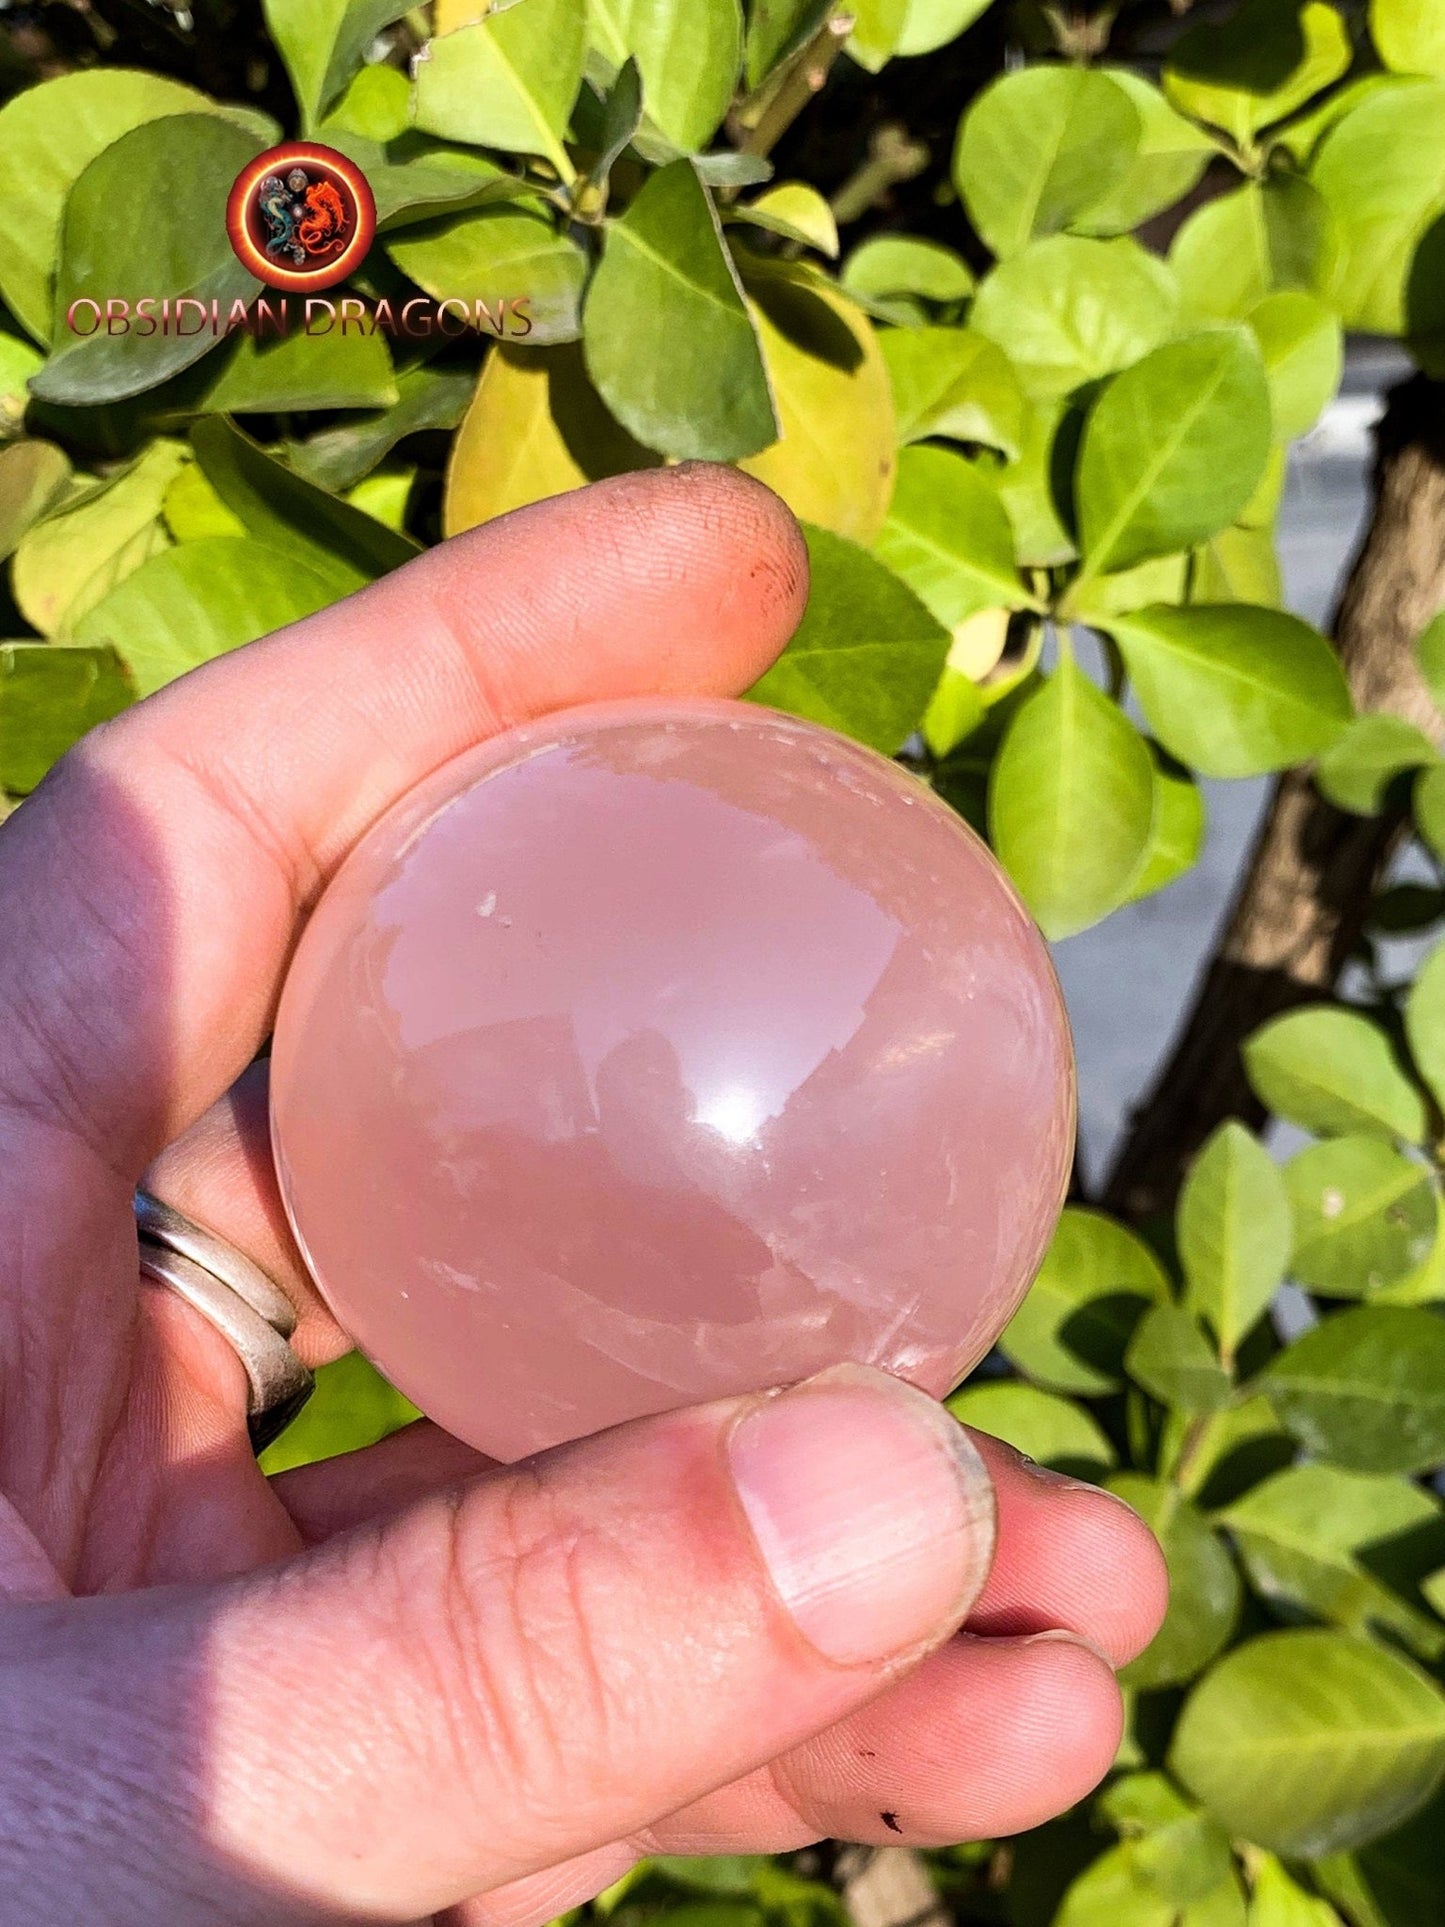 Sphère, quartz rose étoilé, quartz rose astérié ou quartz rose astérisé. Provenance du Mozambique. quartz rose naturel. 55mm de diamètre - obsidian dragon